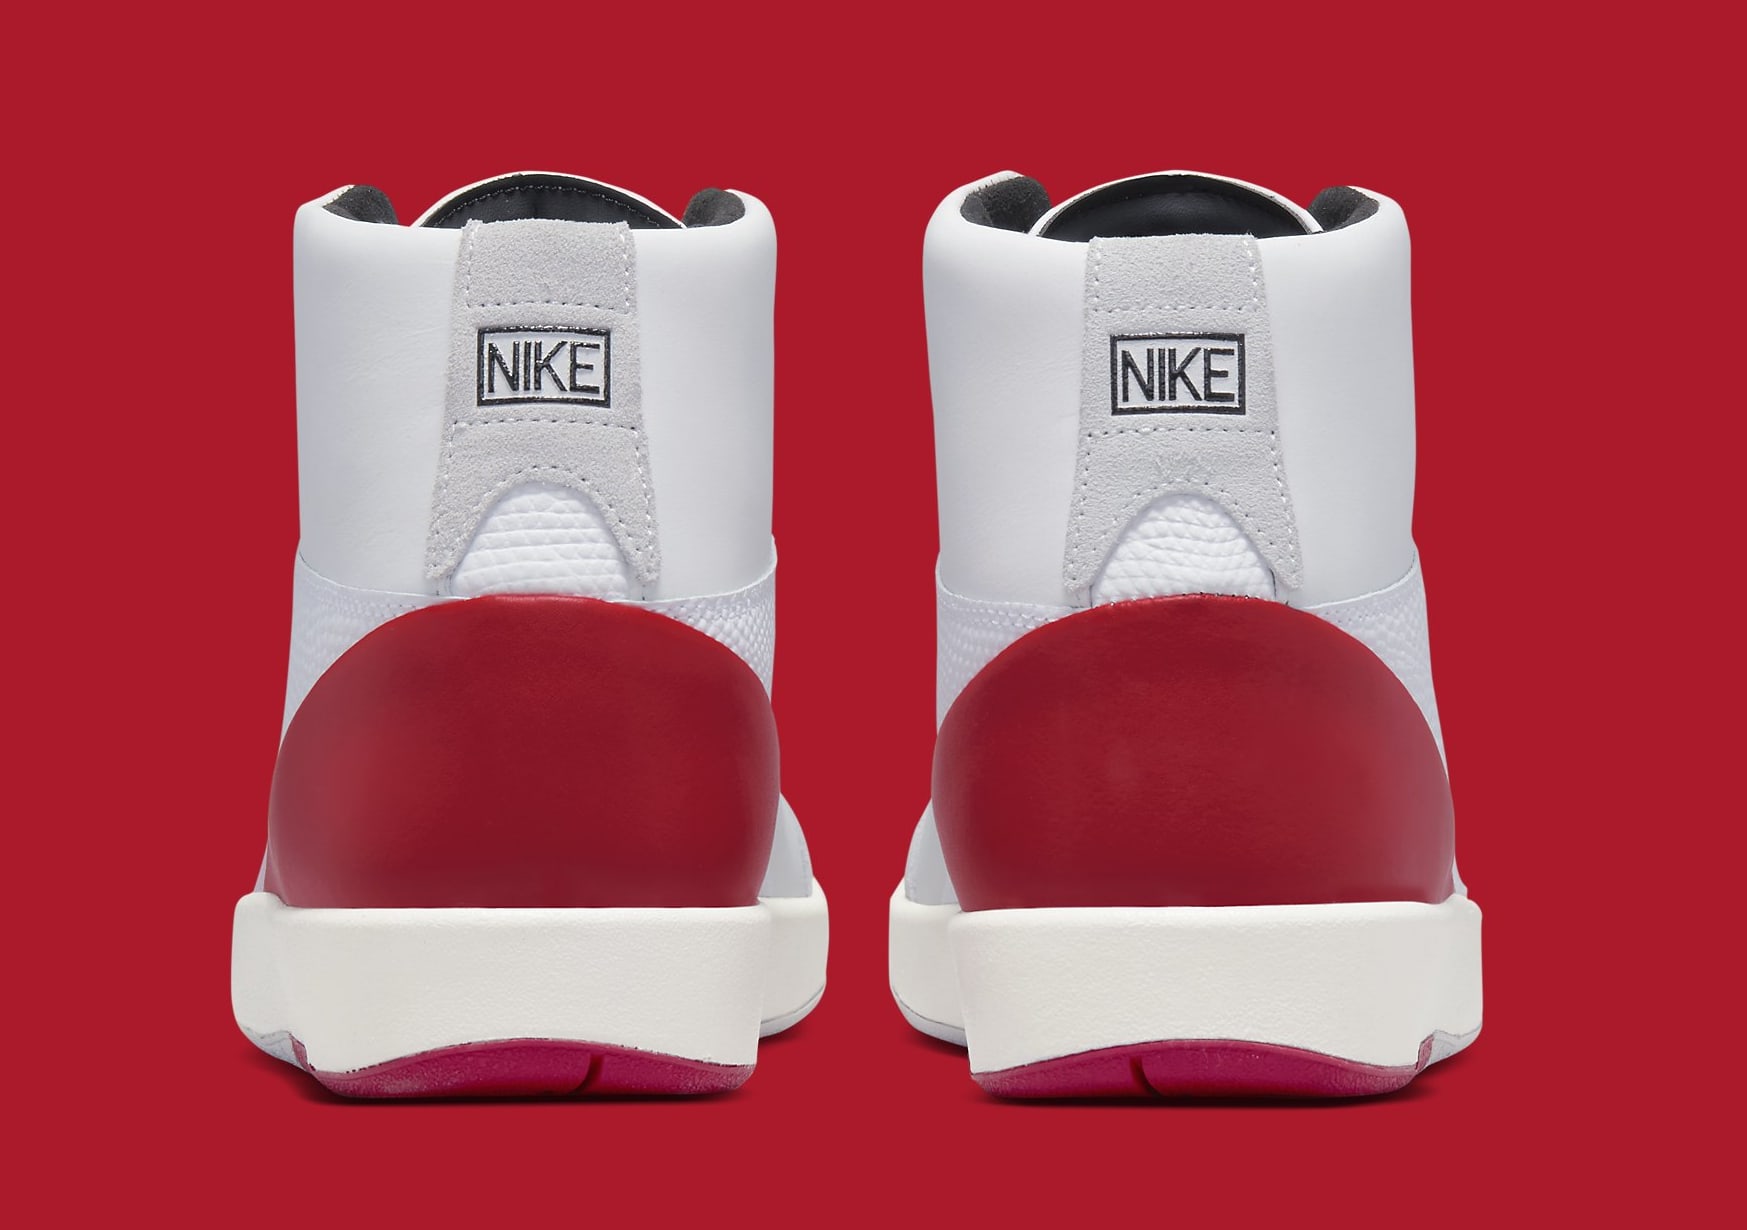 Nina Chanel Abney's Air Jordan 2 Collabs Drop in July